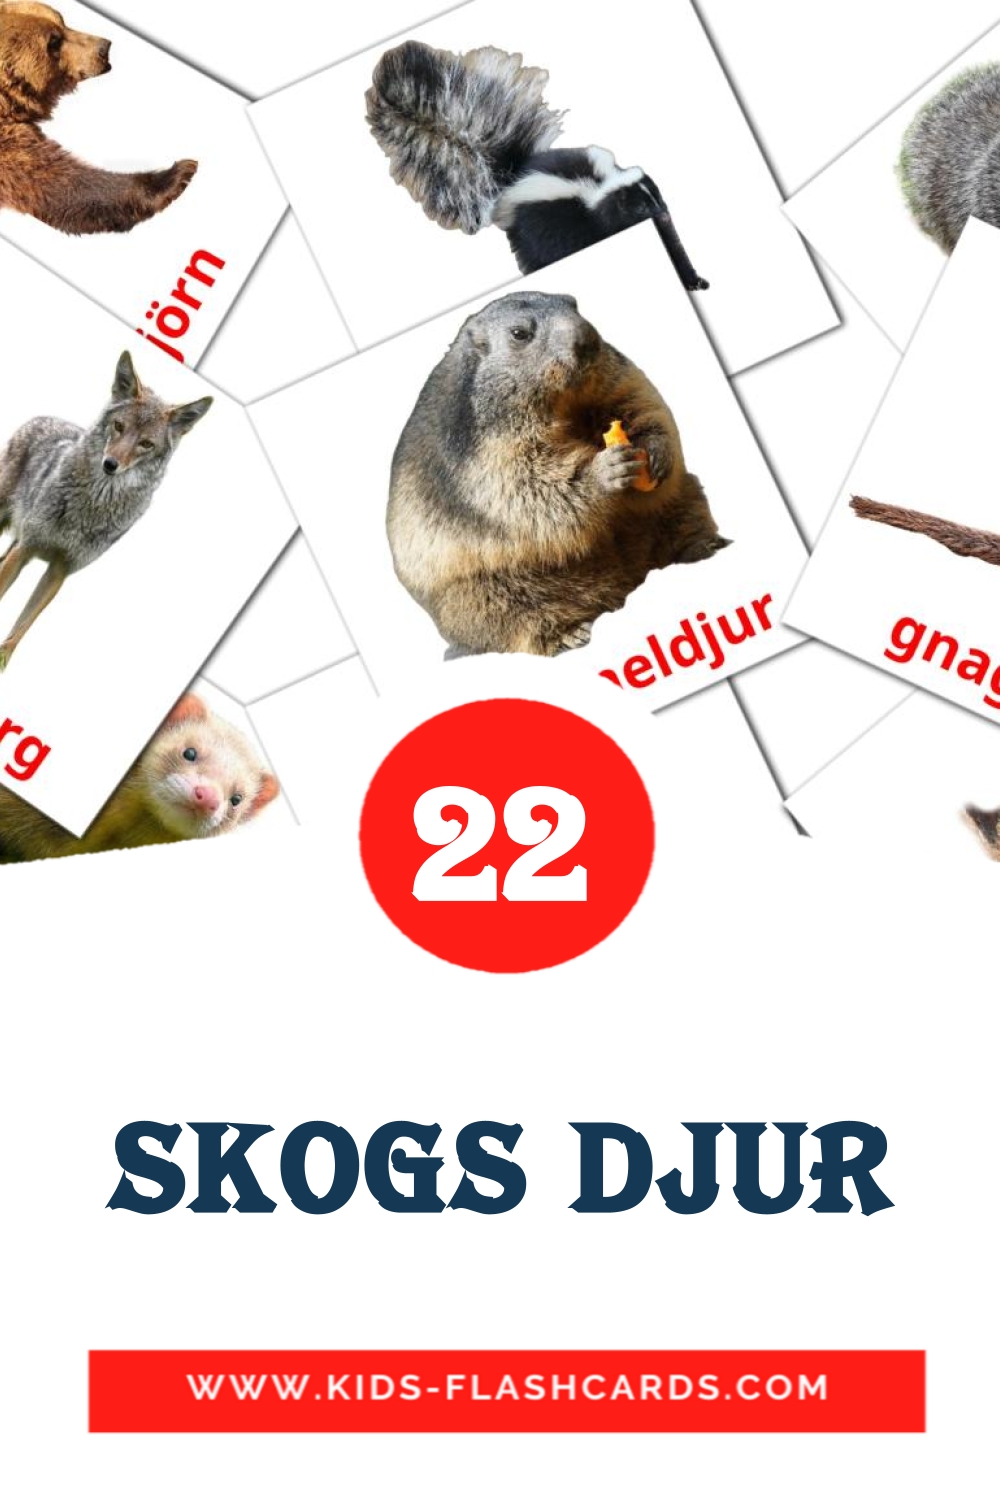 22 carte illustrate di Skogs djur per la scuola materna in svedese